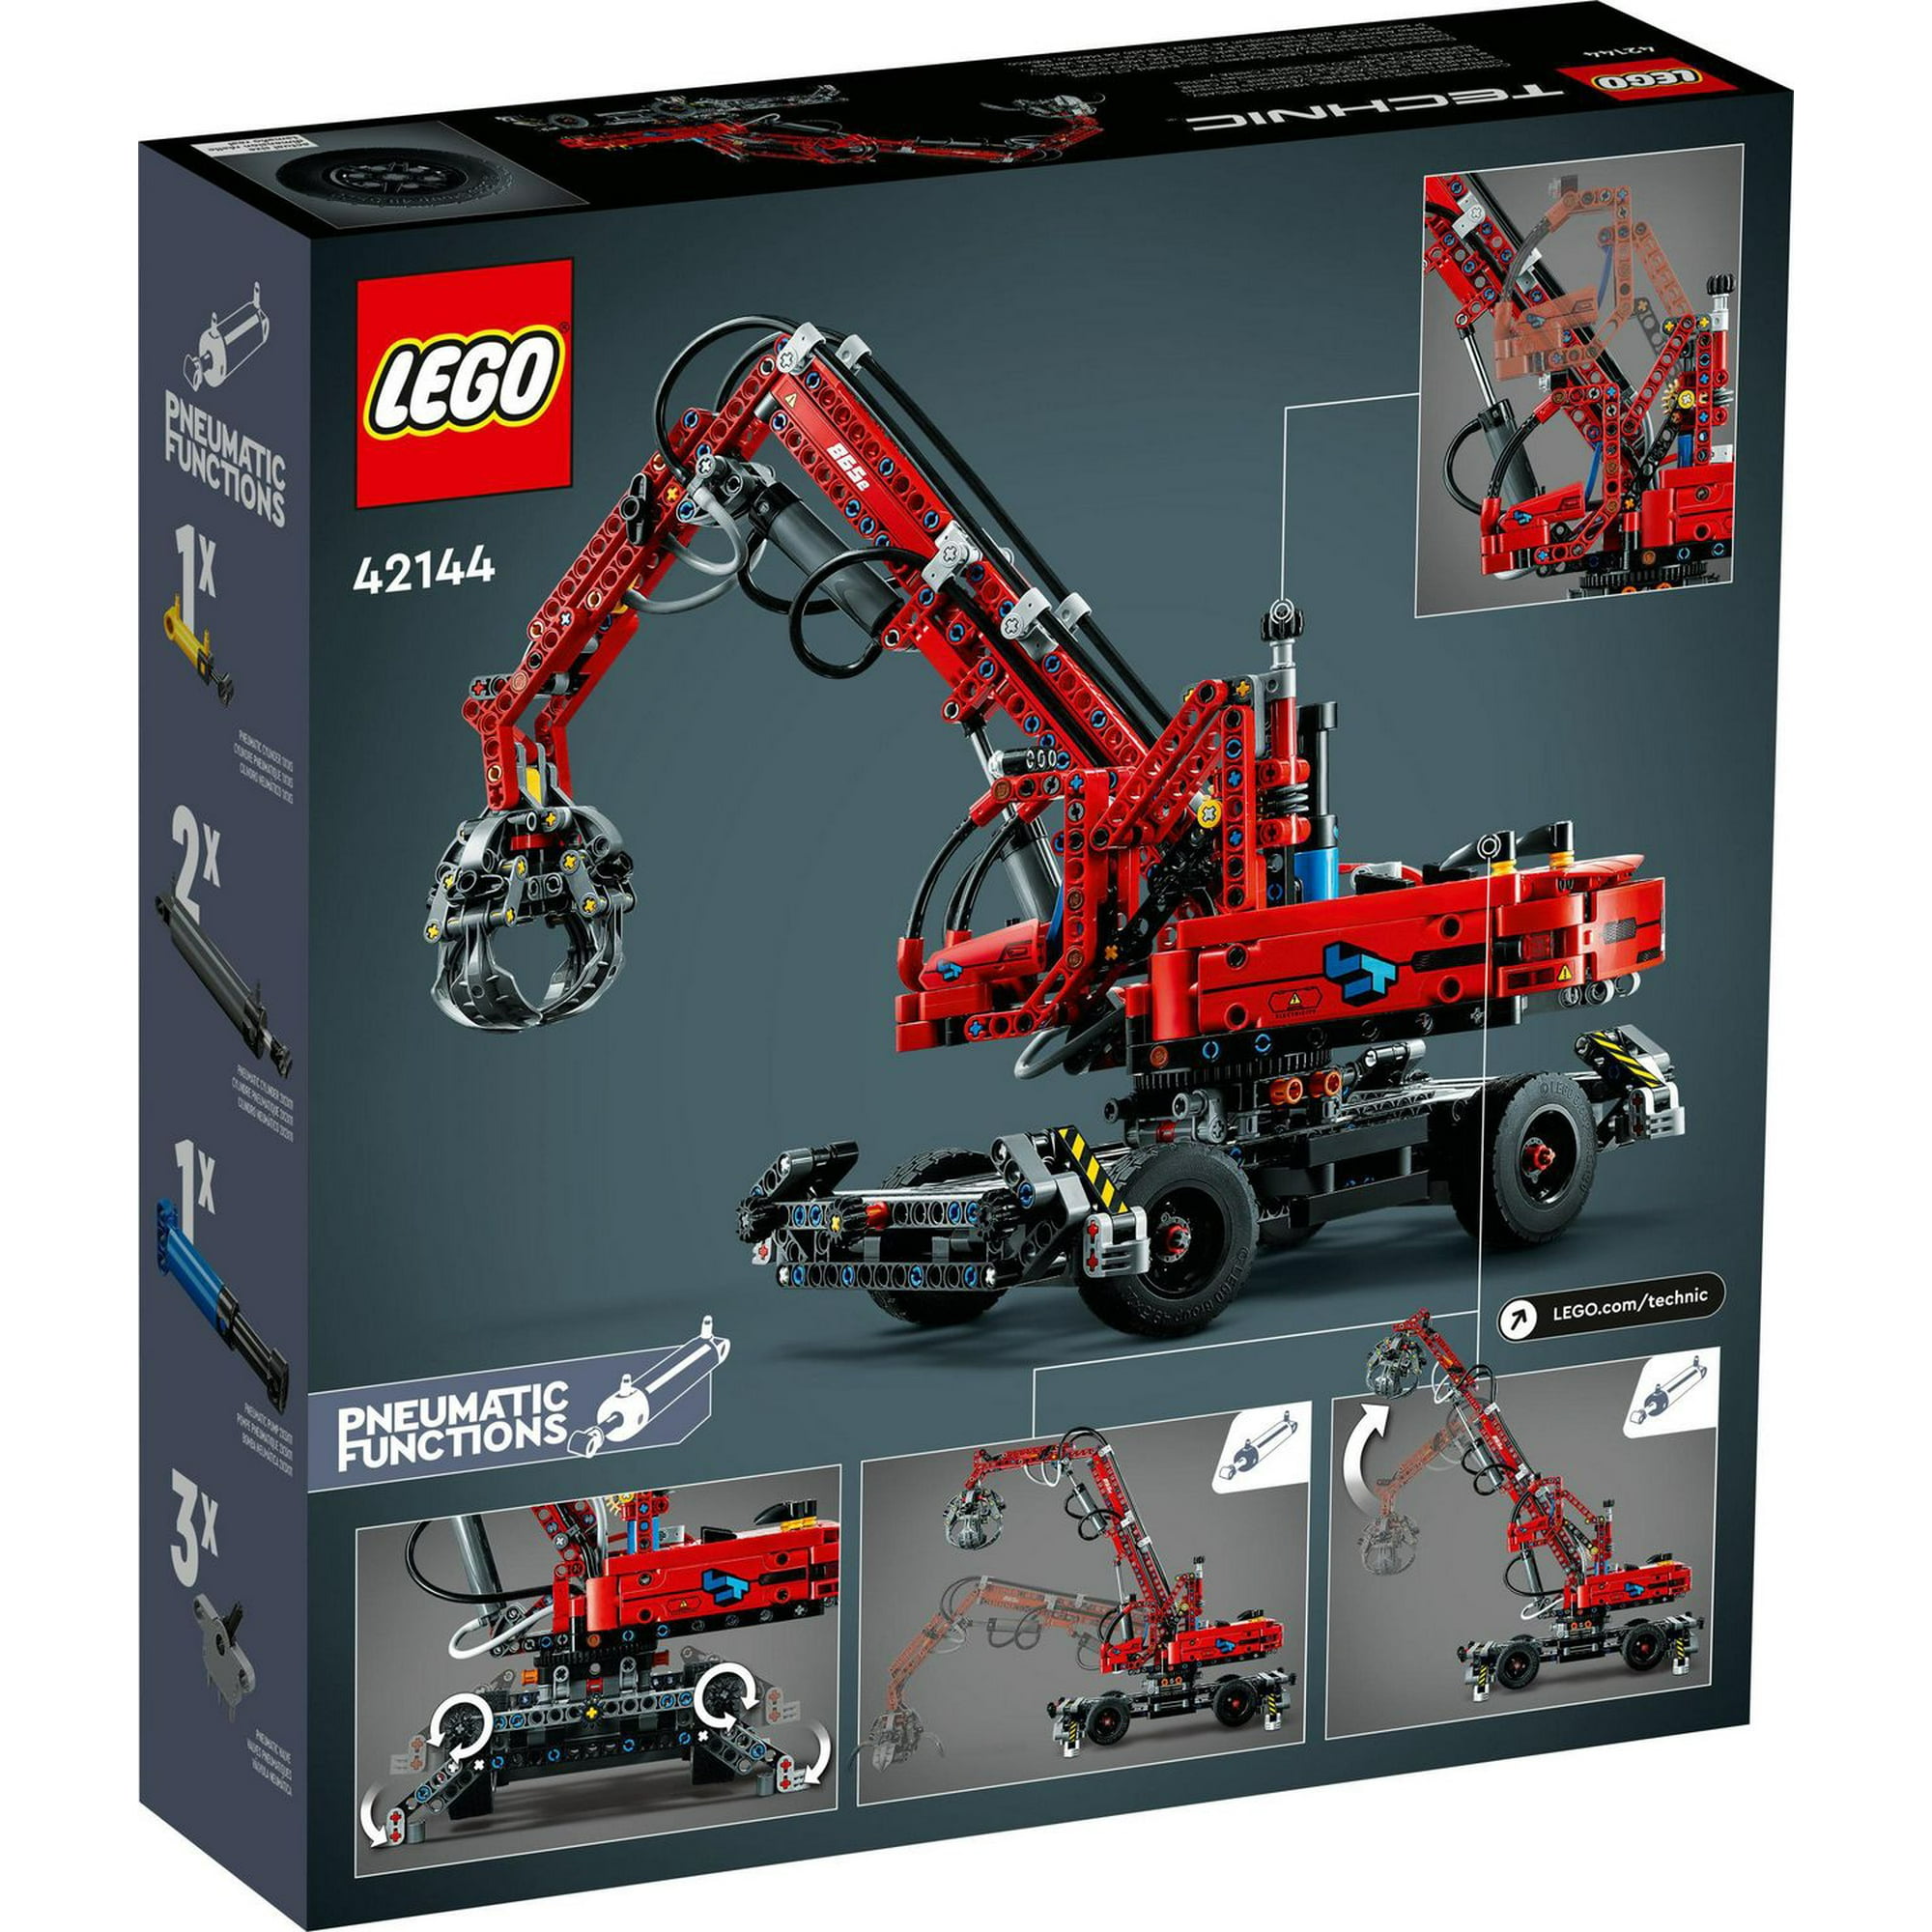 LEGO - Technic - 42144 - Material Handler